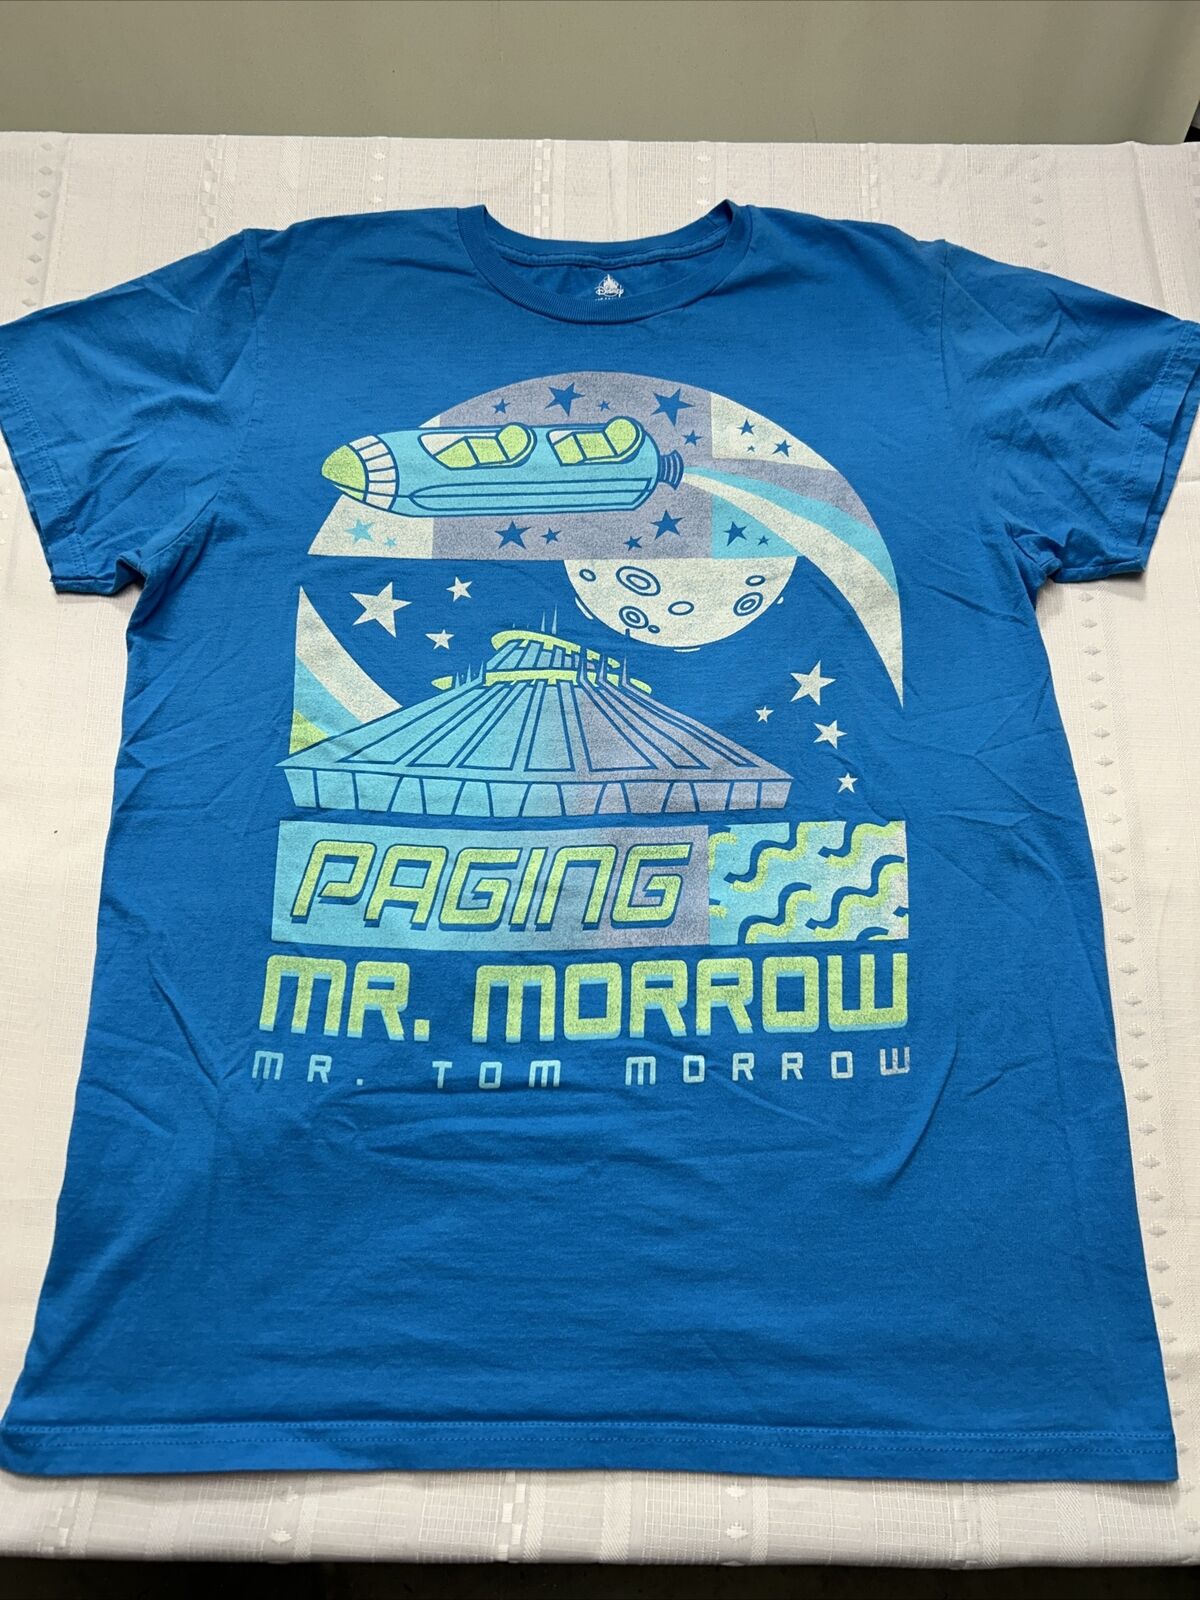 Walt Disney World Tomorrowland/Space Mountain T-Shirt - Adult size Large